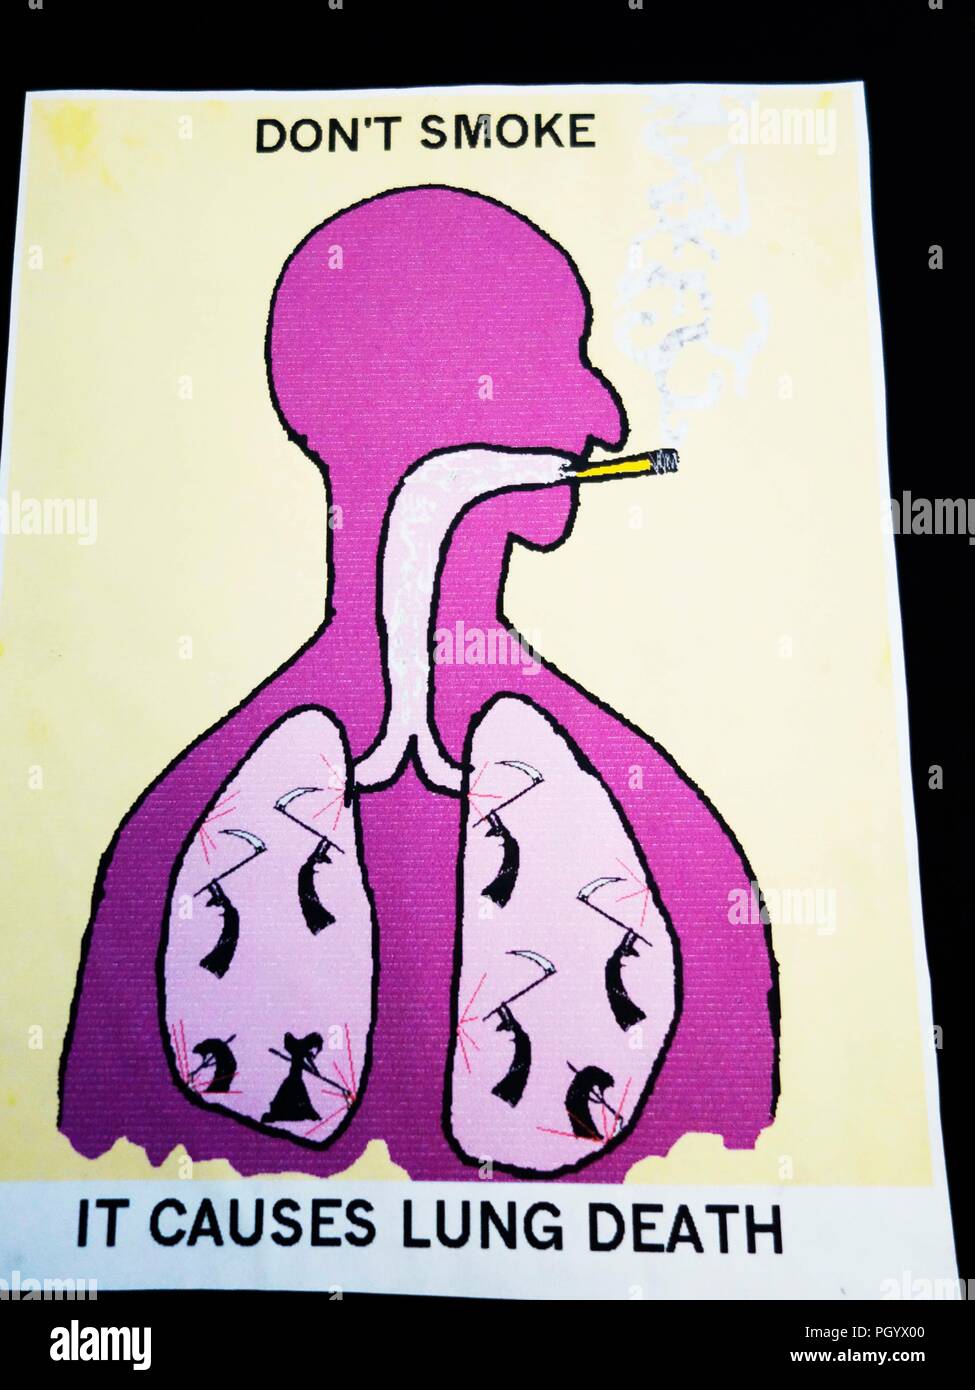 smoking causes lung death pun Stock Photo